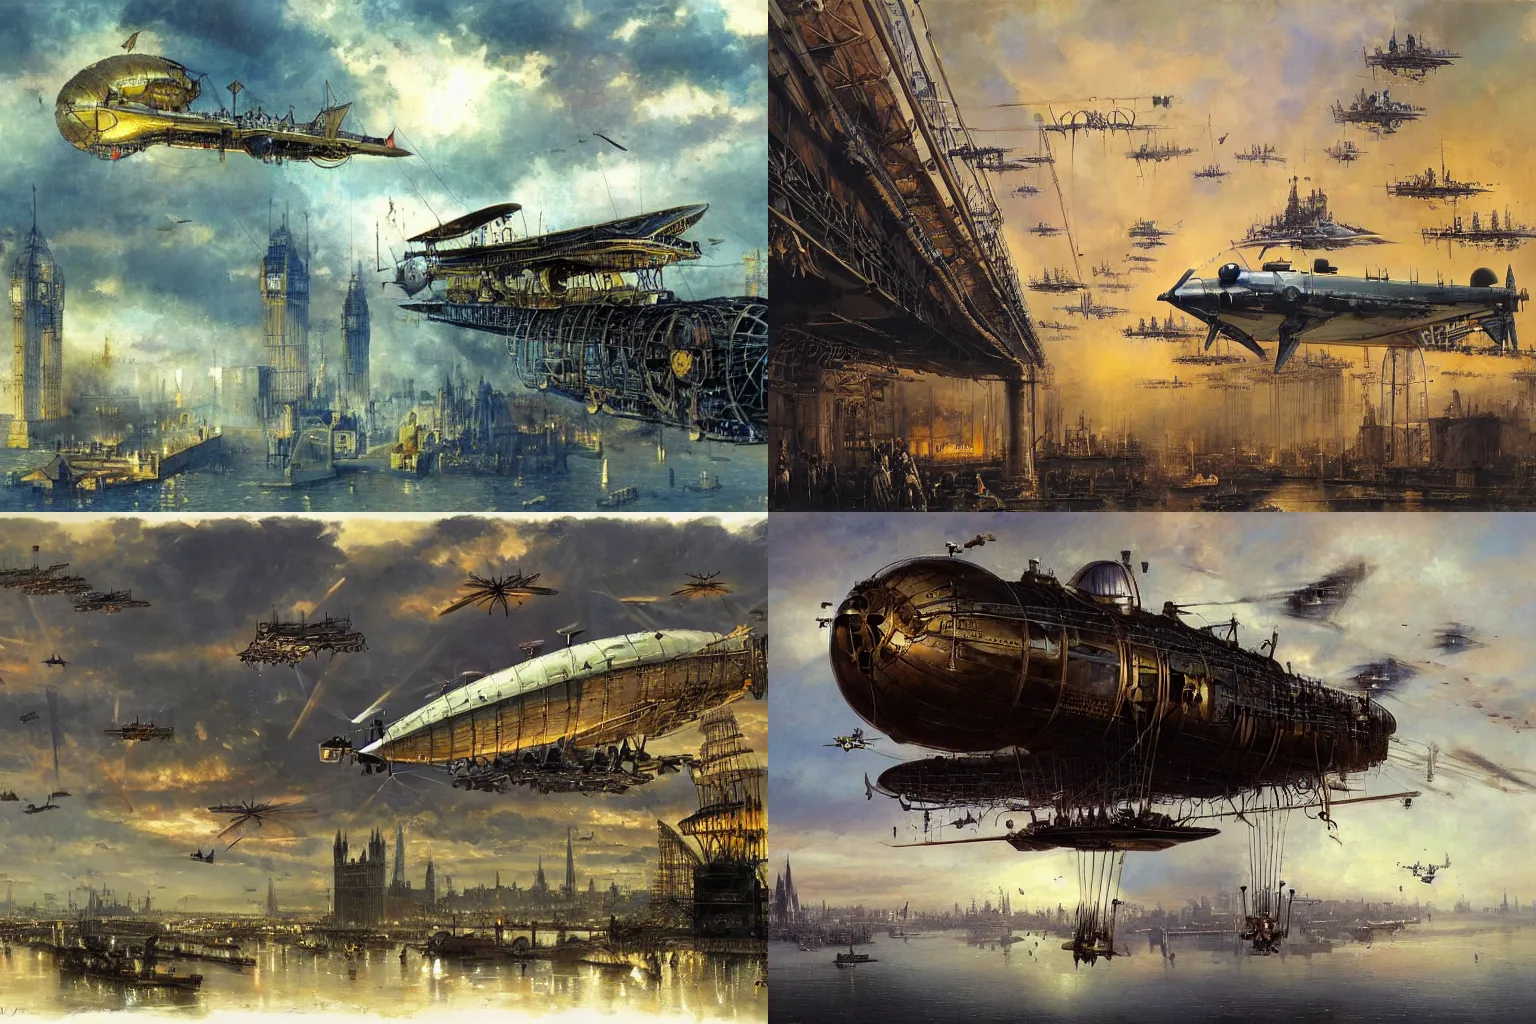 Prompt: steampunk military airship, bat wings, fins, sails, propellers, gondola, portals, flying over London, industrial revolution, by John Berkey